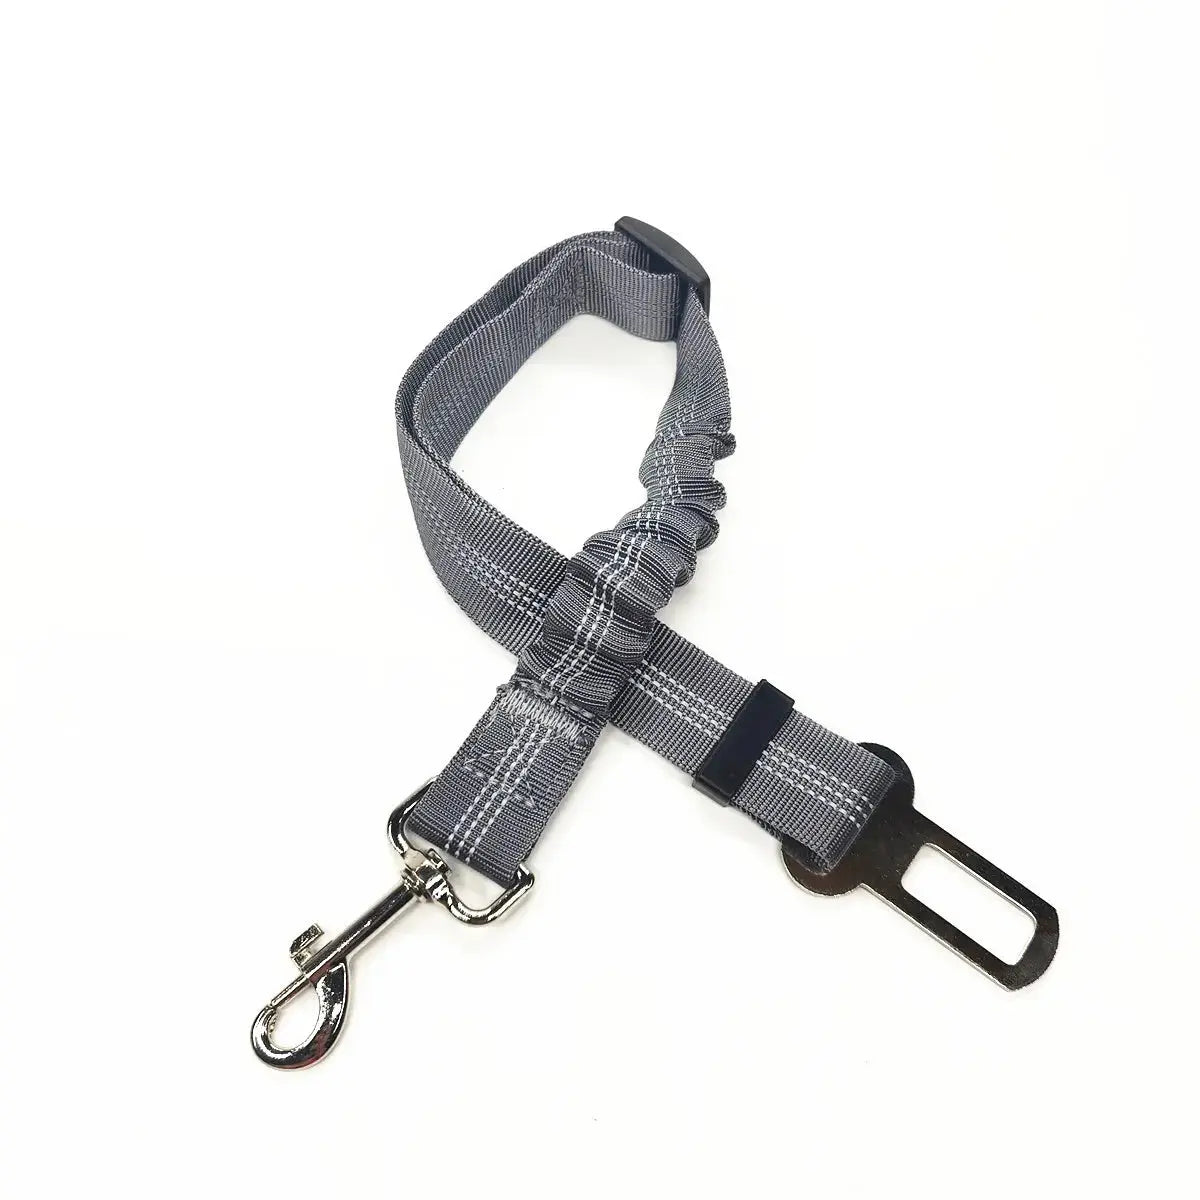 Dog Seat Belt - Harness for Dogs Car Seatbelt - GoGetIt.AI